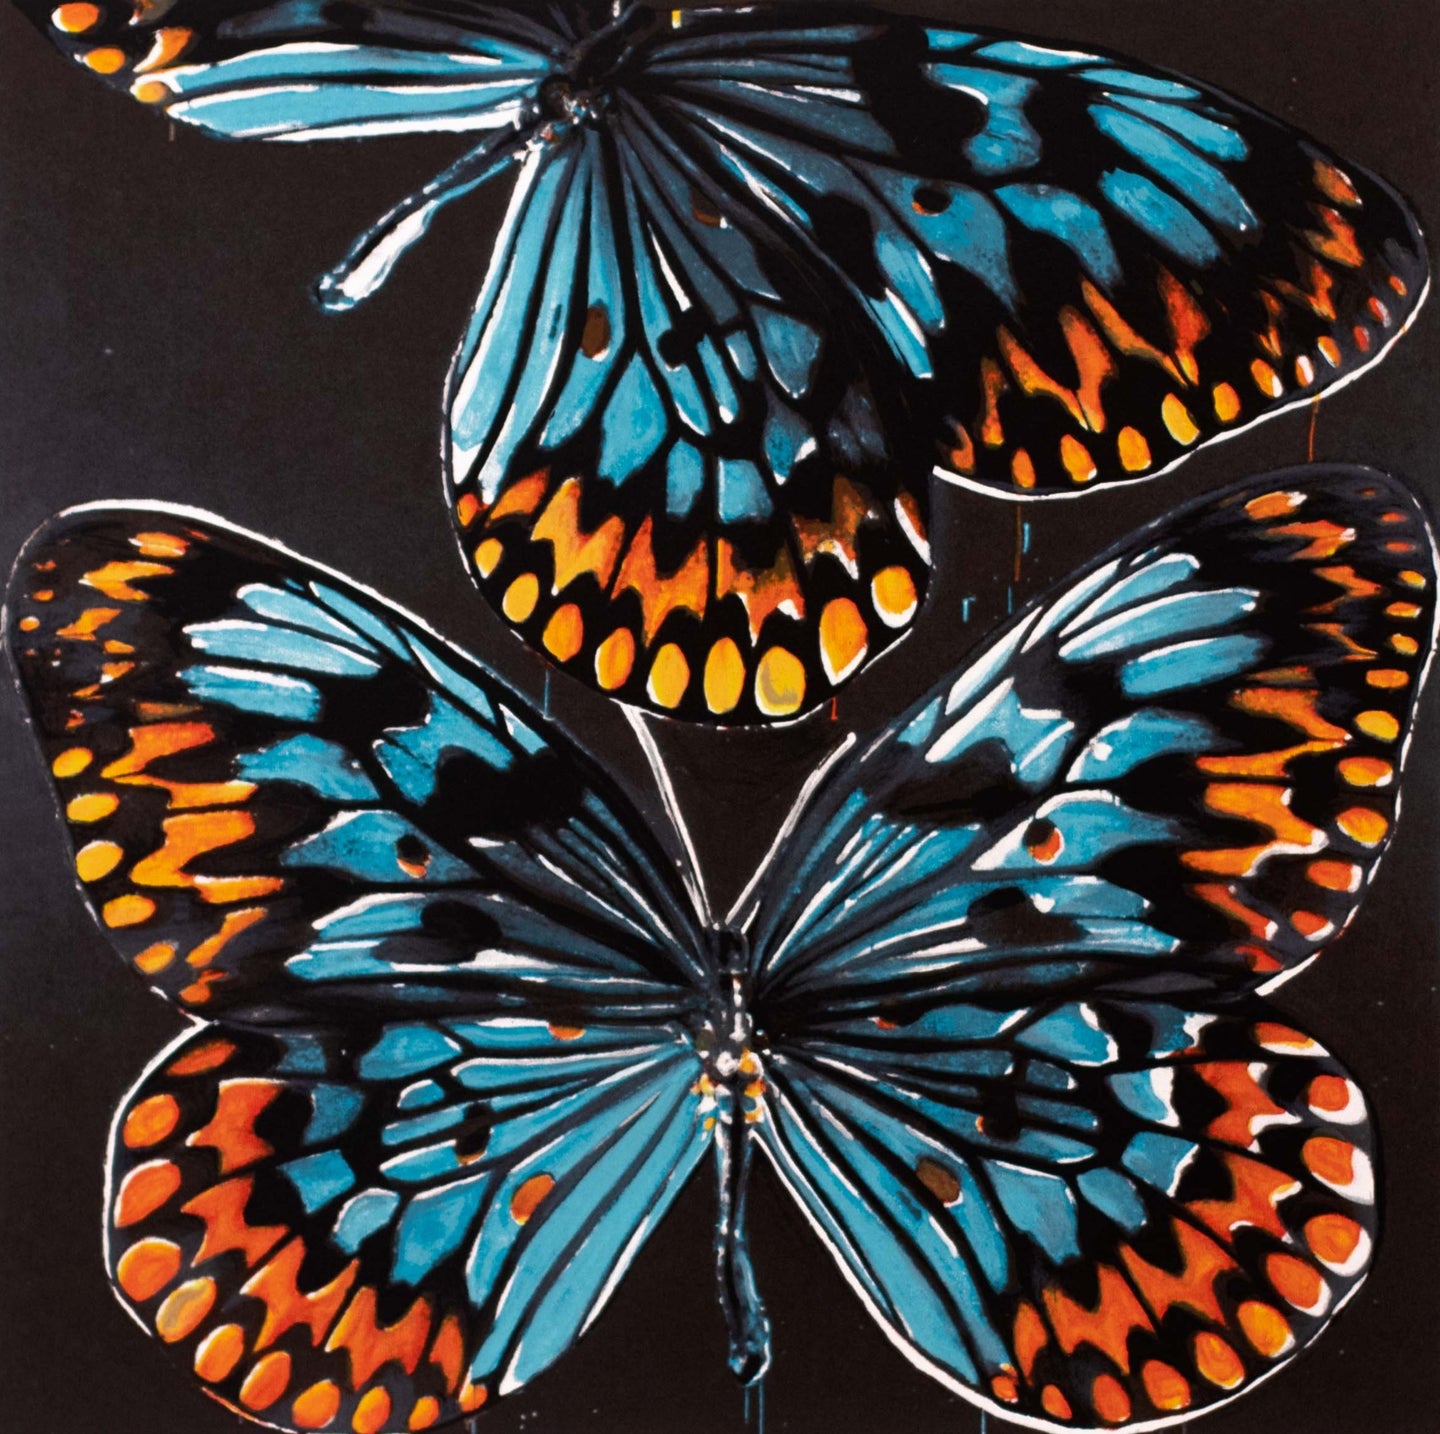 Untitled (Butterflies), 1998